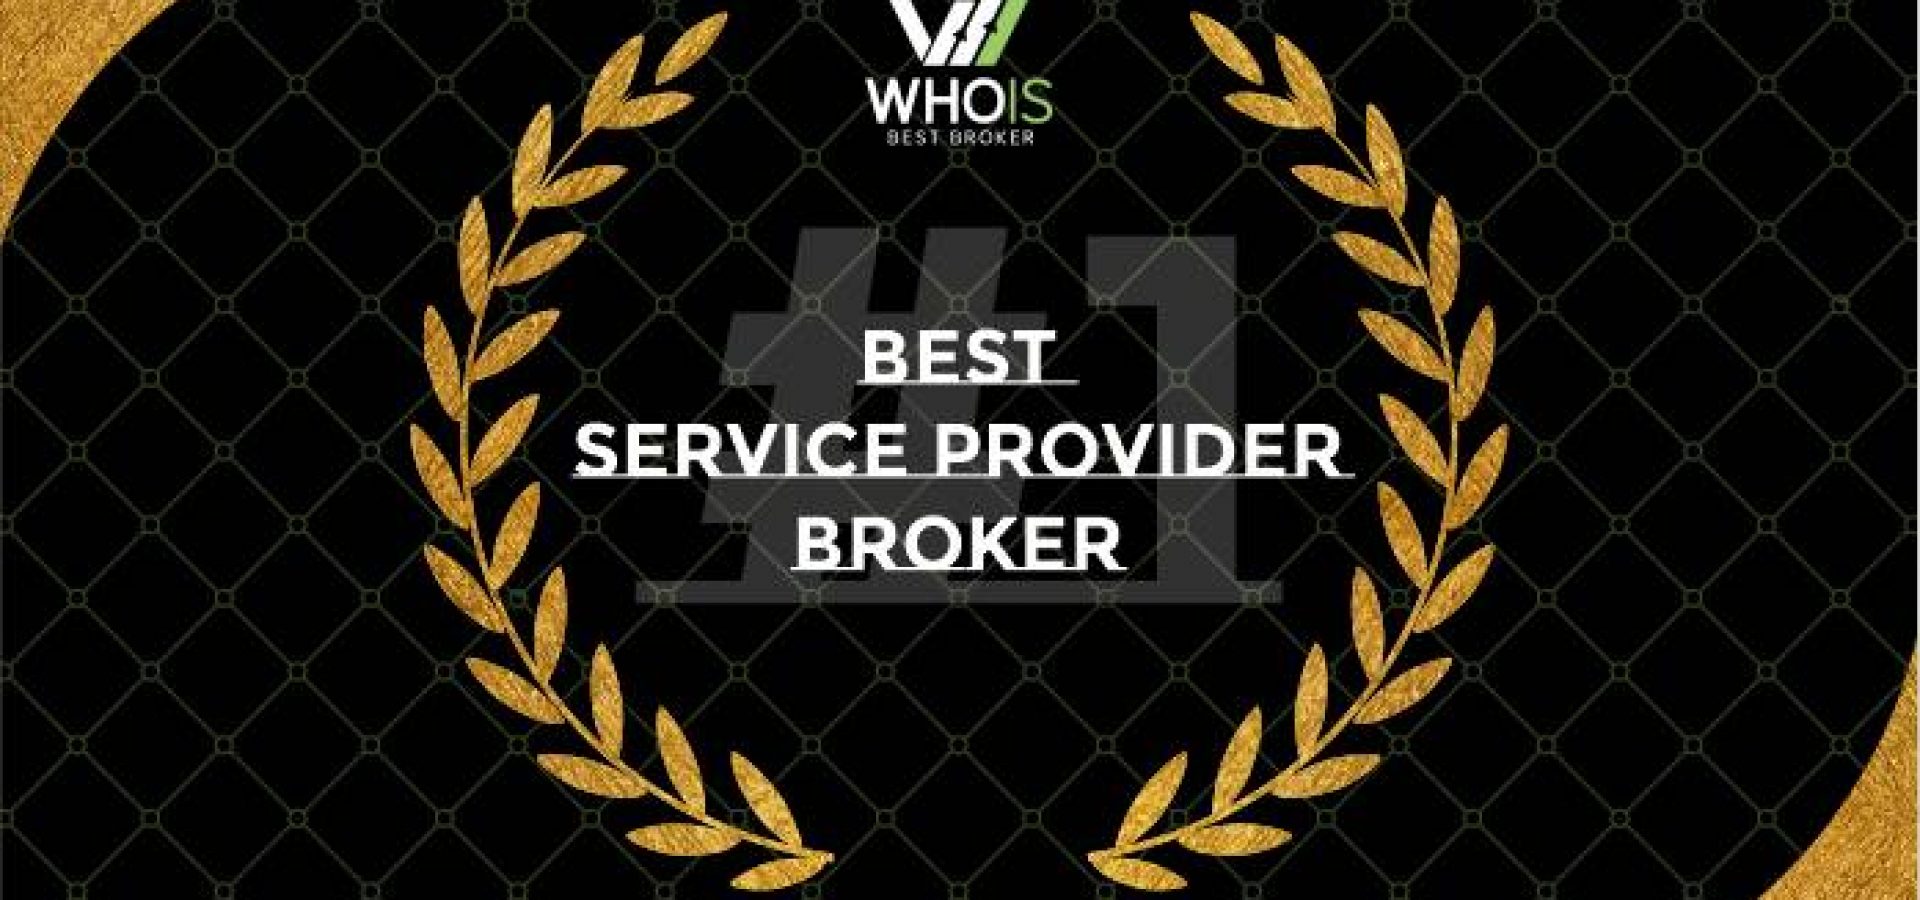 Best Service Provider Broker Awards